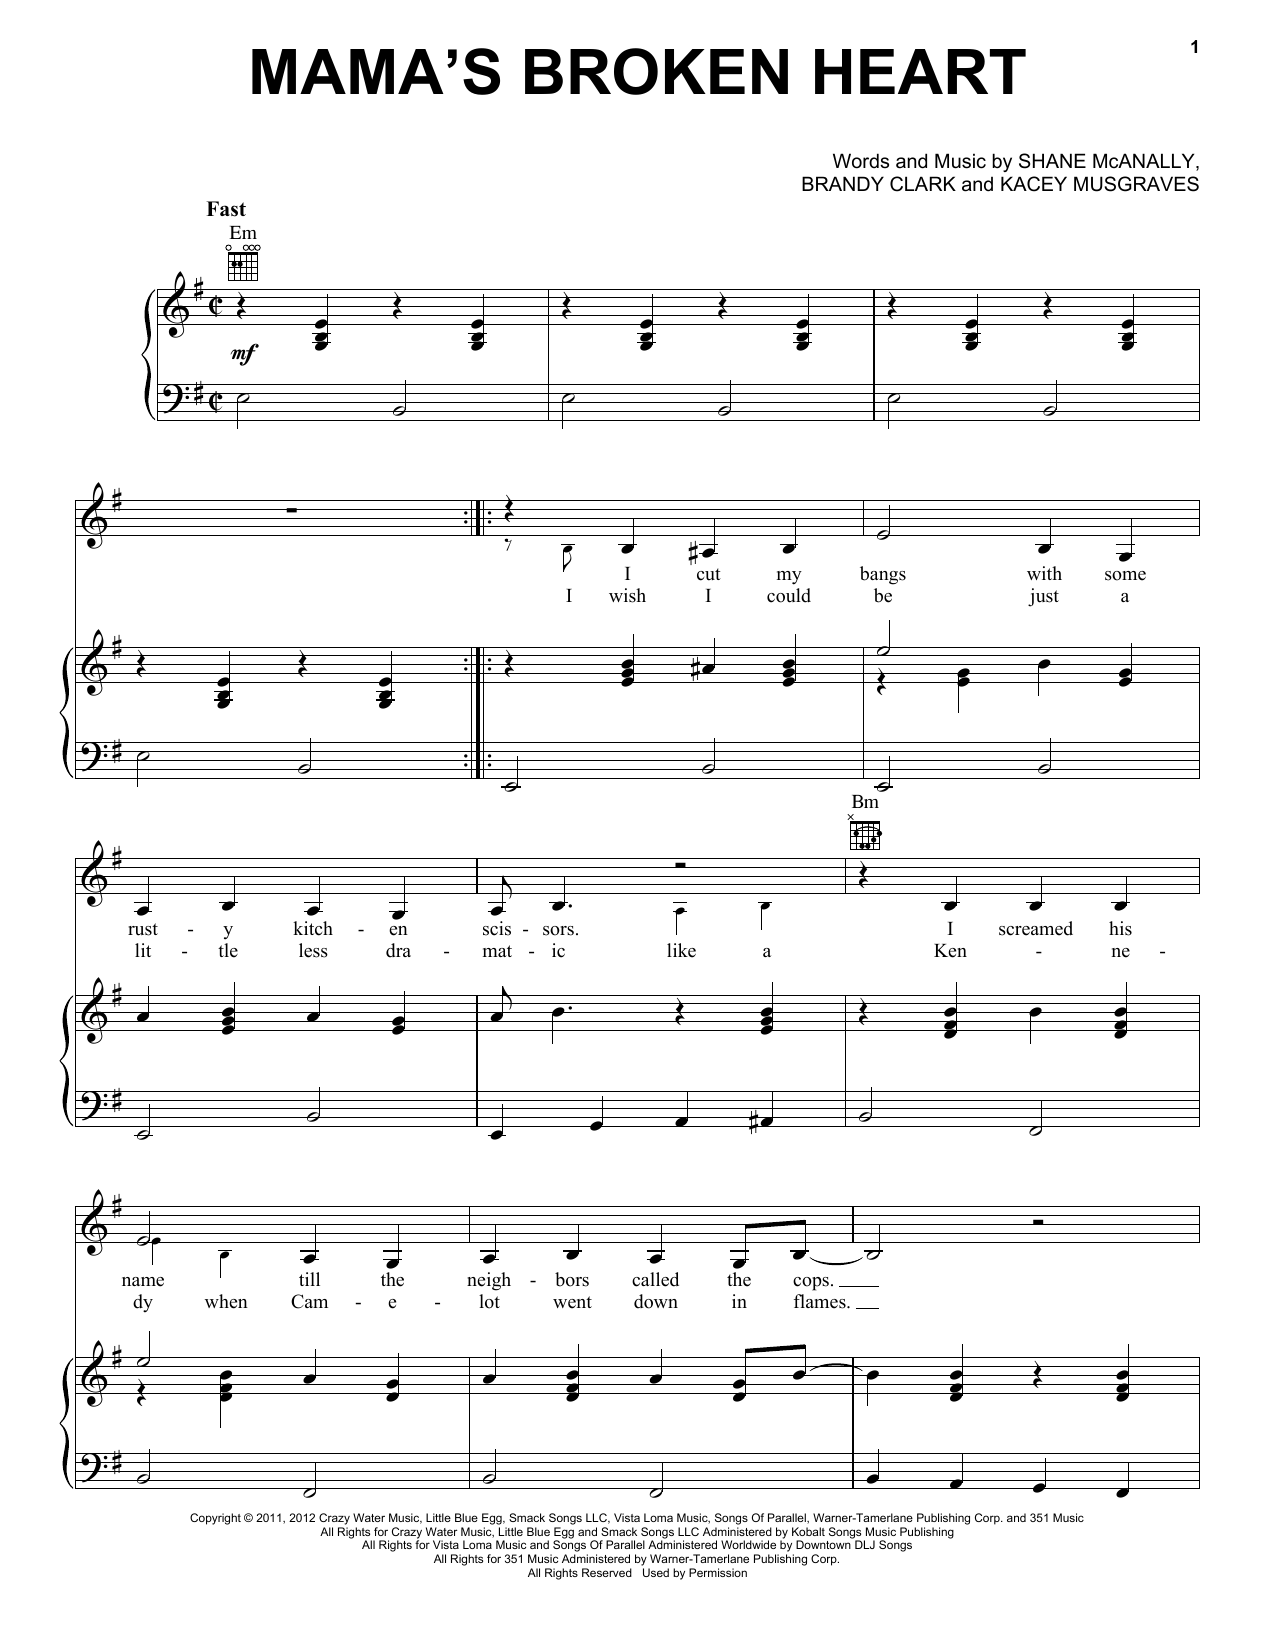 Download Miranda Lambert Mama's Broken Heart Sheet Music and learn how to play Lyrics & Chords PDF digital score in minutes